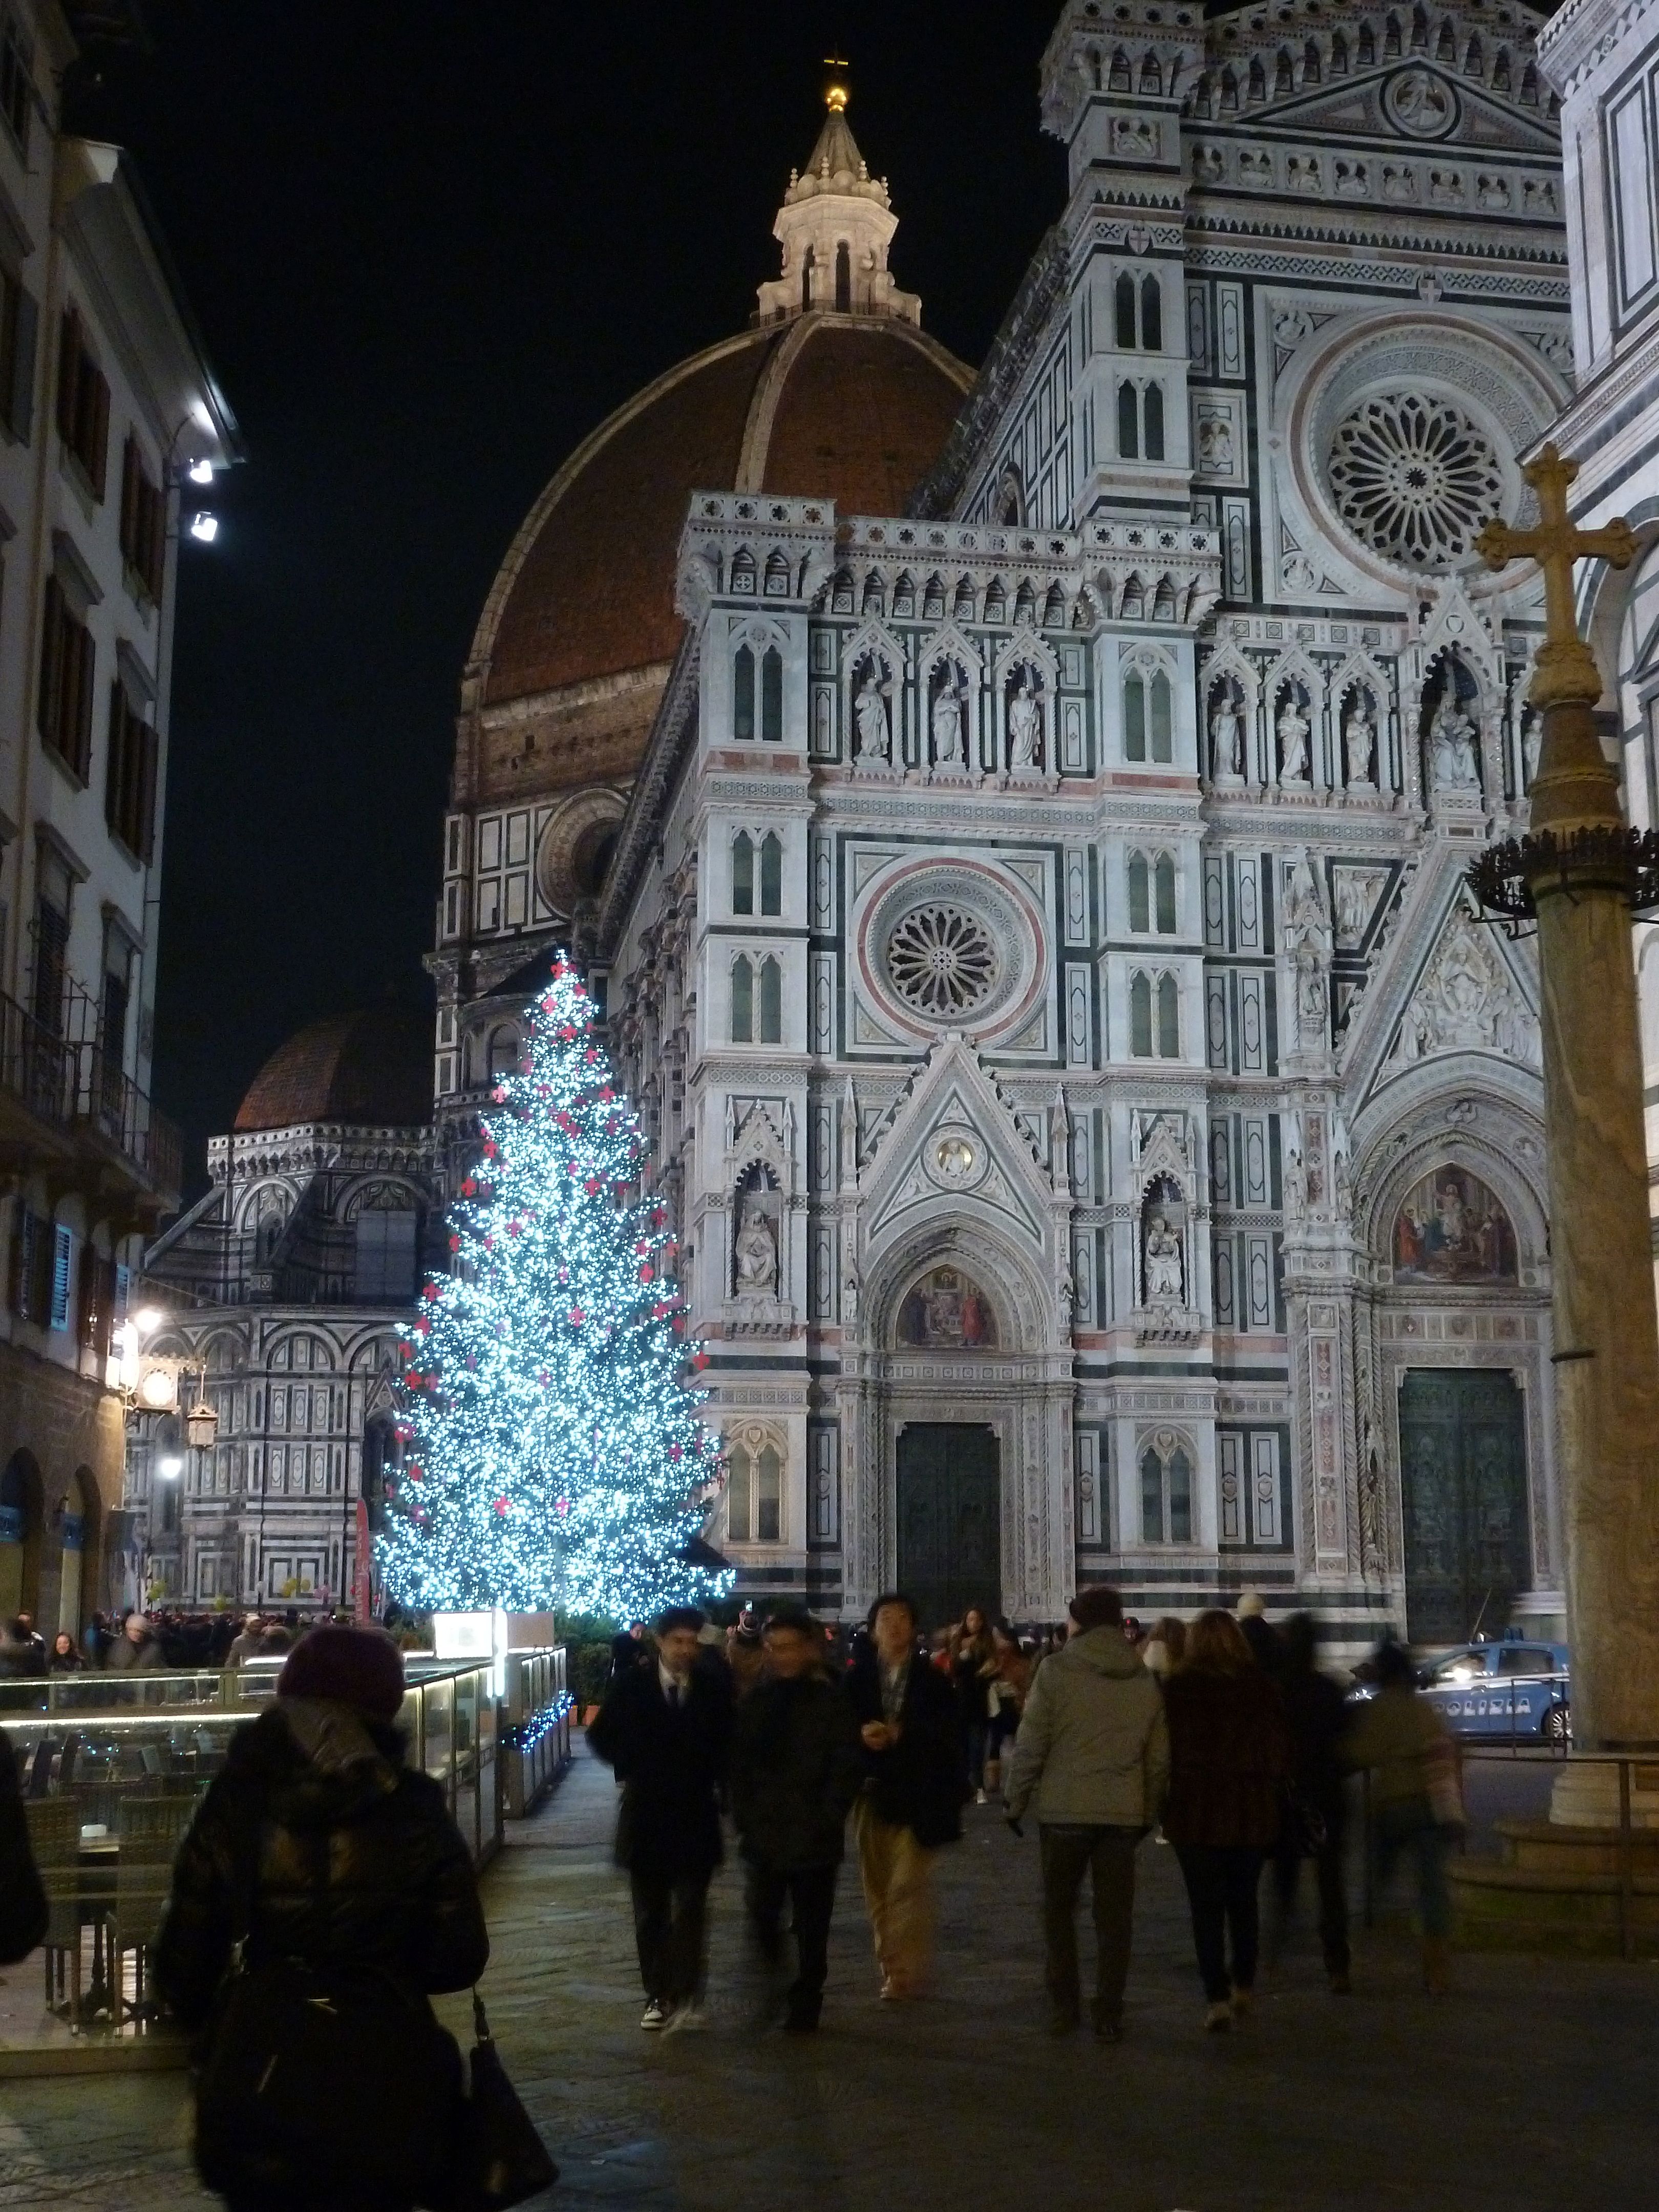 The Christmas tree in front of Santa Maria del Fiore